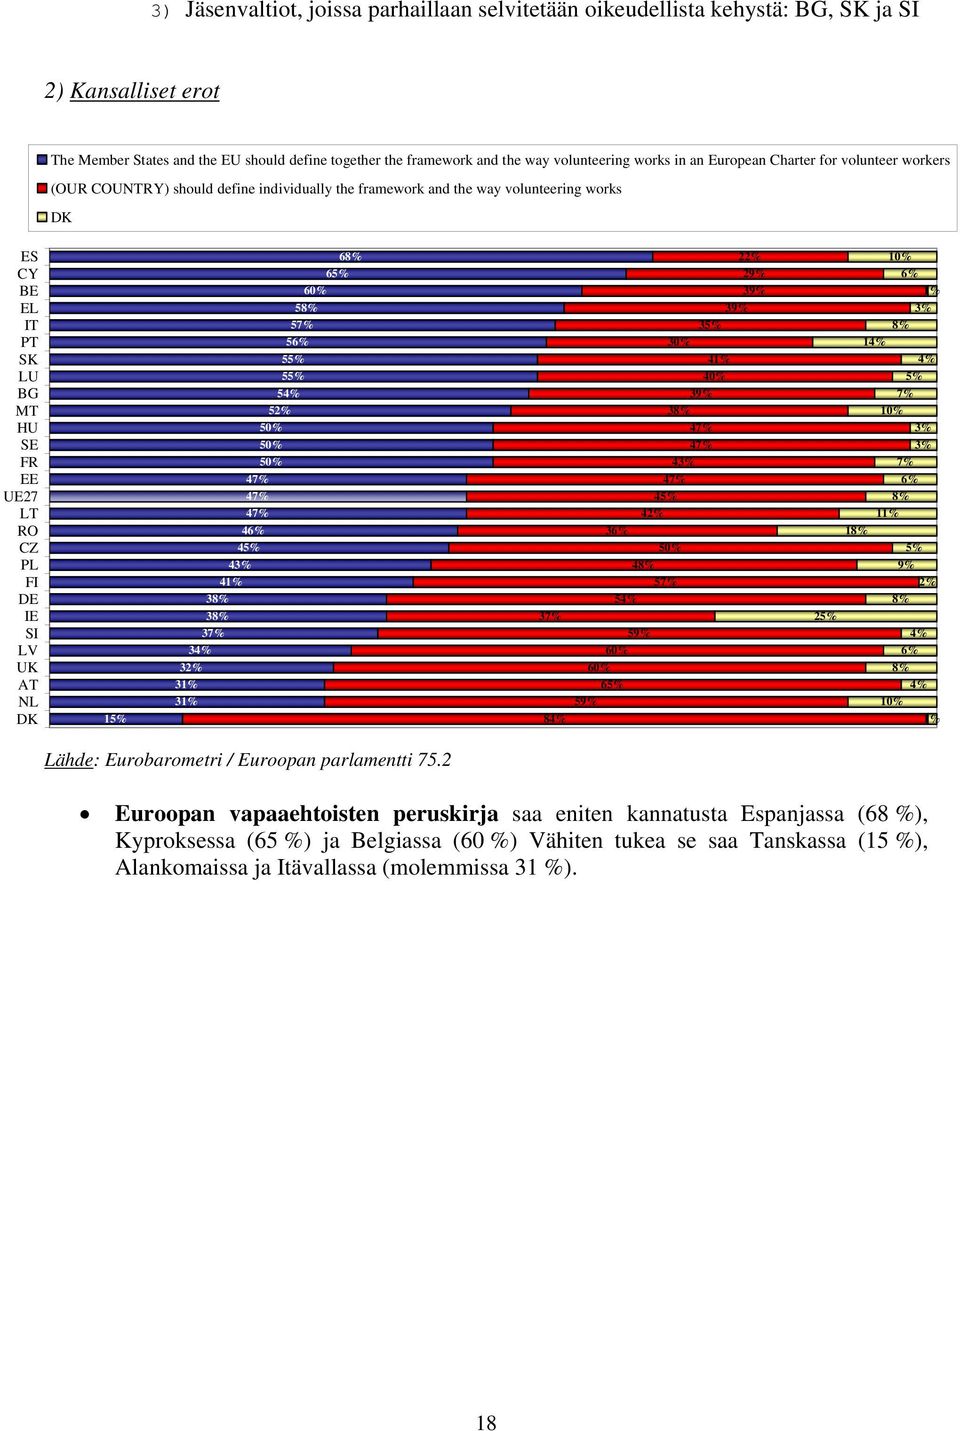 FI DE IE SI LV UK AT NL DK 15% 68% 65% 60% 58% 5 56% 55% 55% 54% 5 50% 50% 50% 4 4 4 46% 45% 4 4 38% 38% 3 34% 3 3 3 2 29% 39% 39% 35% 30% 4 40% 39% 38% 4 4 4 4 45% 4 36% 50% 48% 5 54% 3 59% 60% 60%